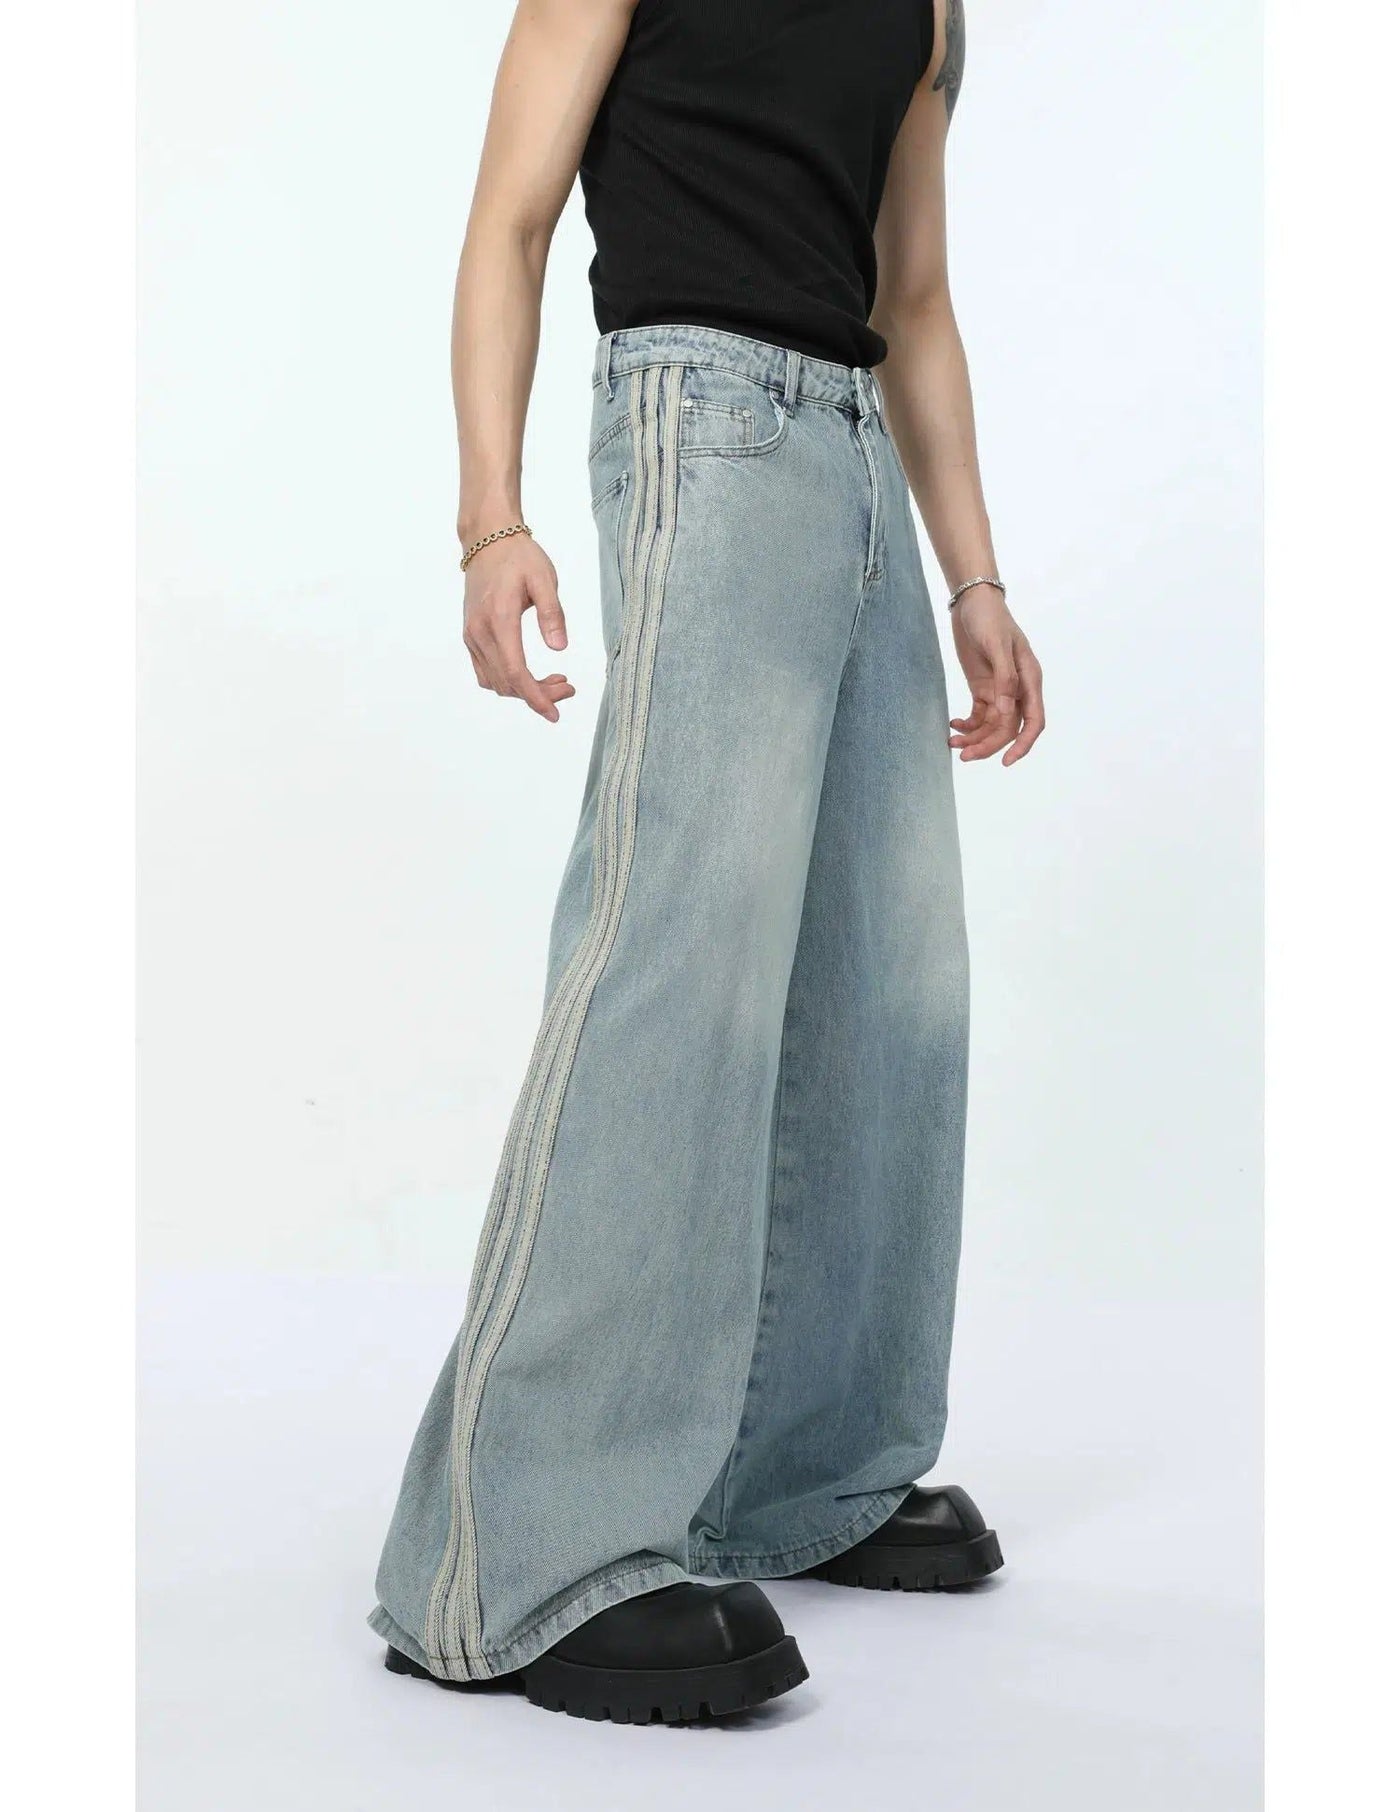 Faded Denim Shirt & Jeans Set Korean Street Fashion Clothing Set By Turn Tide Shop Online at OH Vault